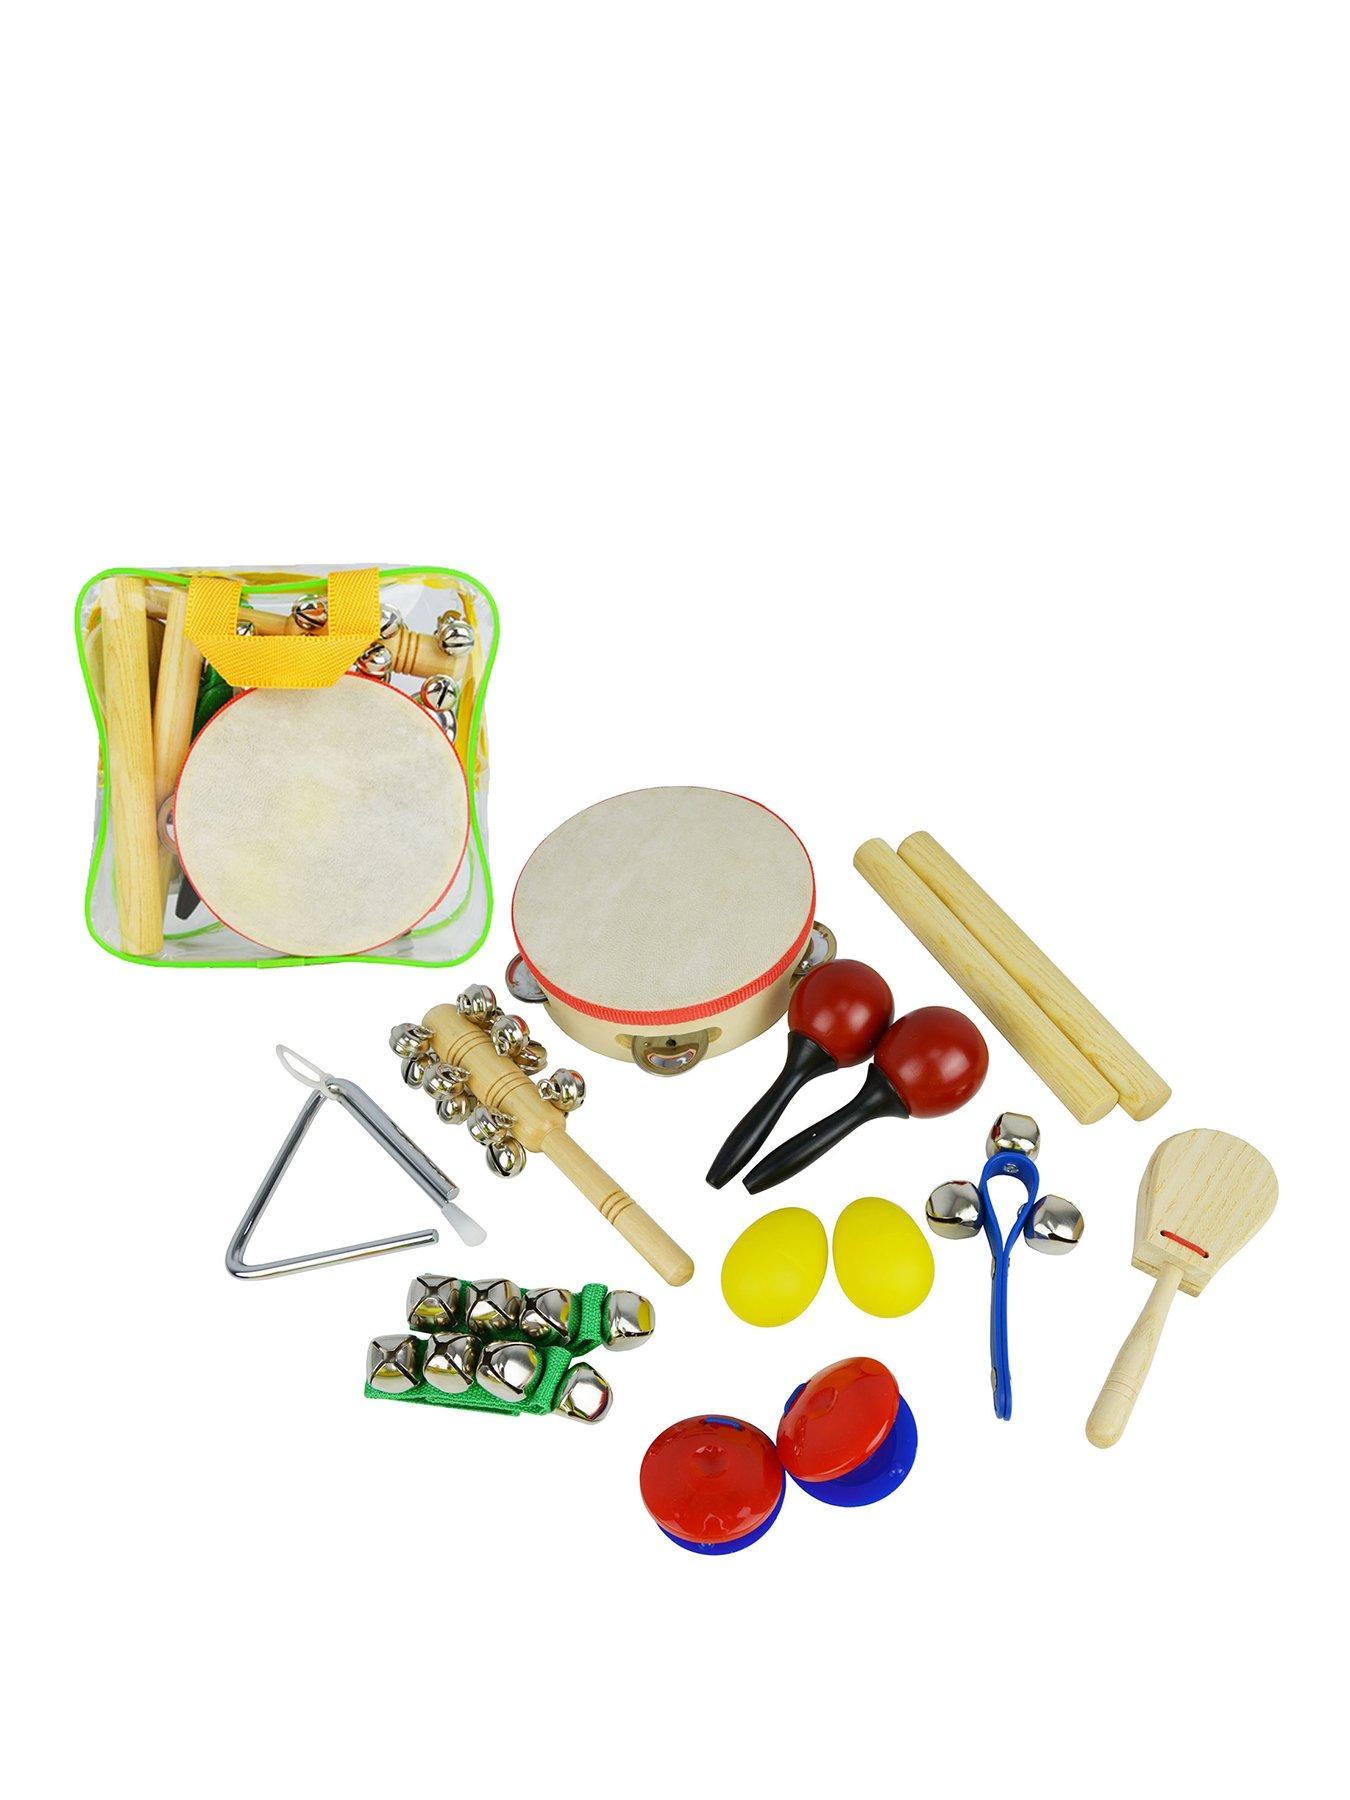 Kids Childrens Music Playmat Electronic Drum Kit Toy Musical Mat 34 x 25 cm 